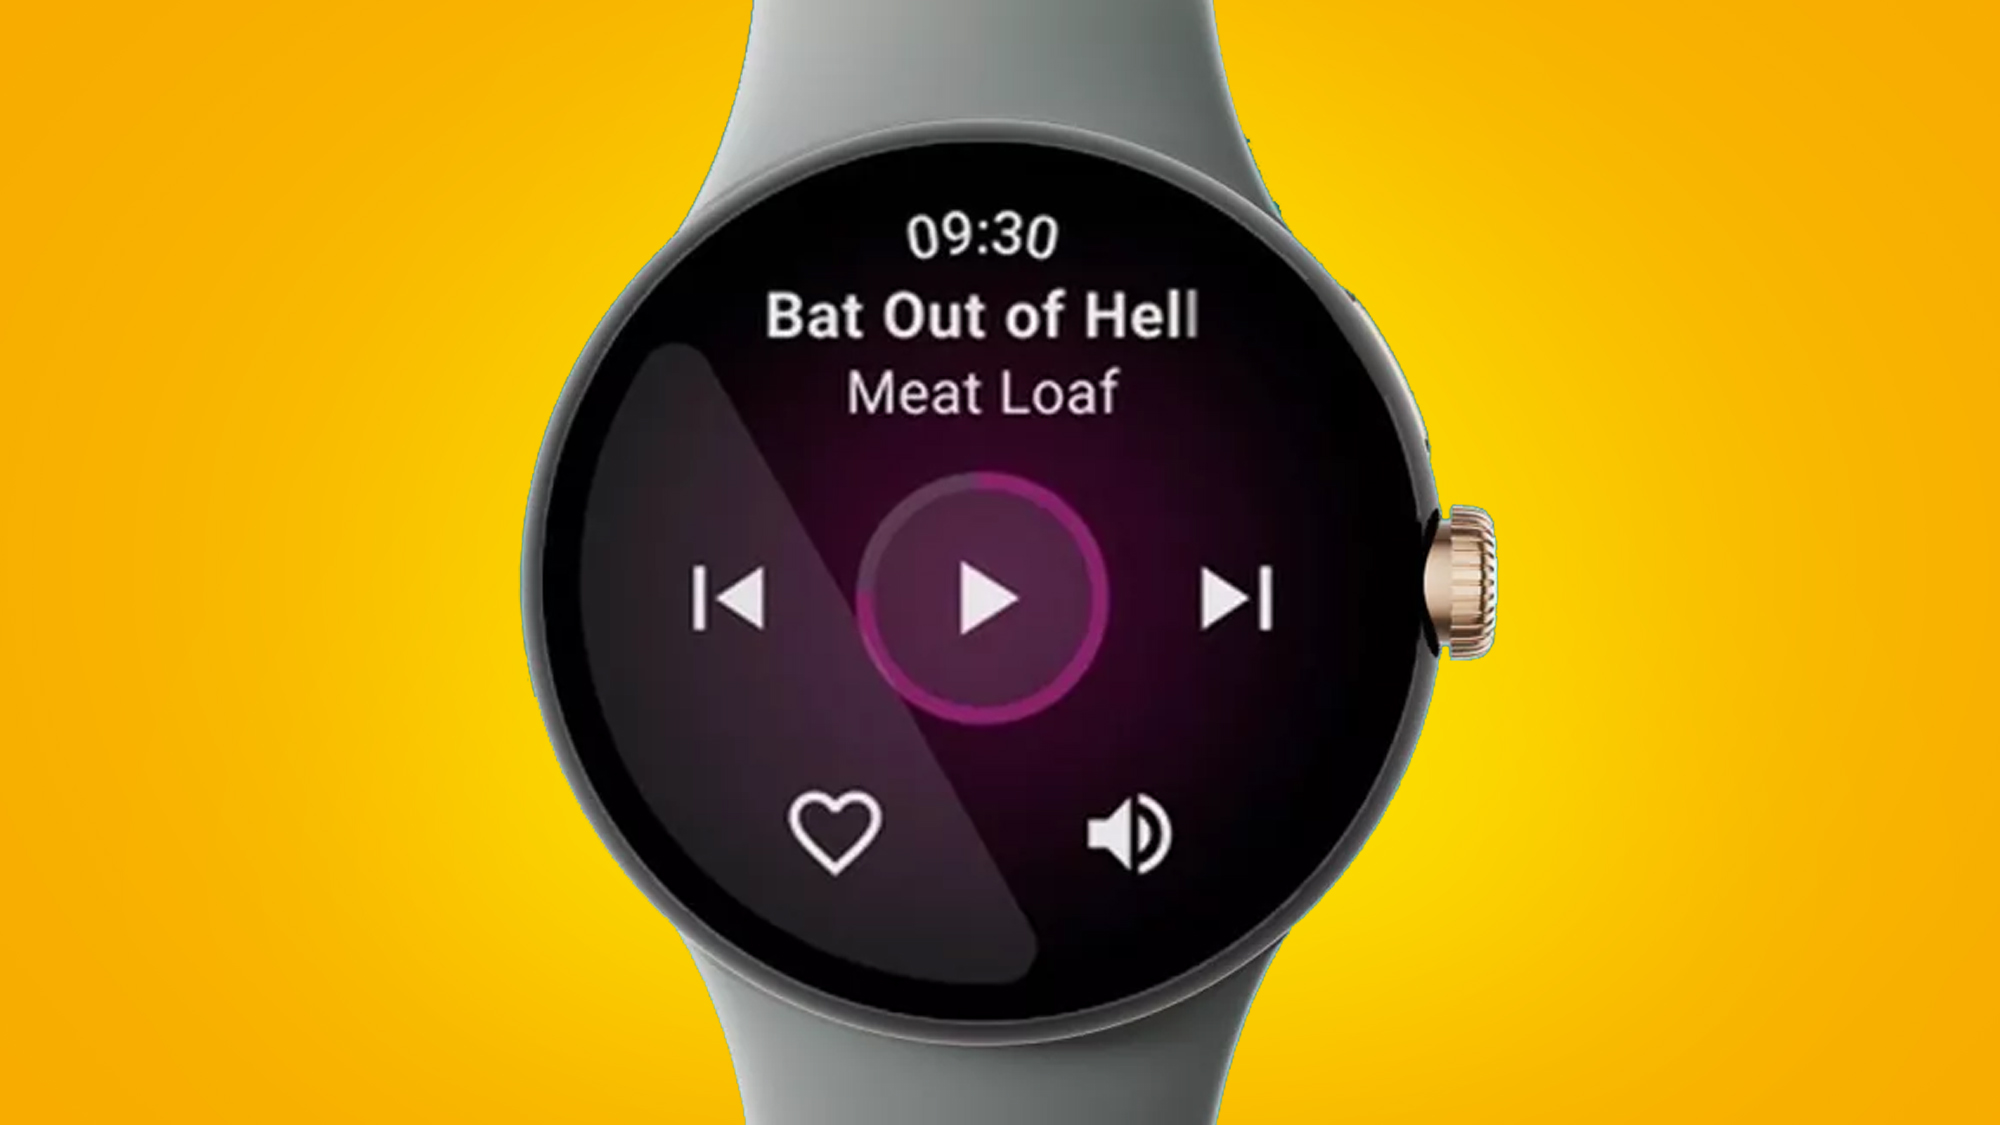 Smart watch on orange background showing Google Wear OS